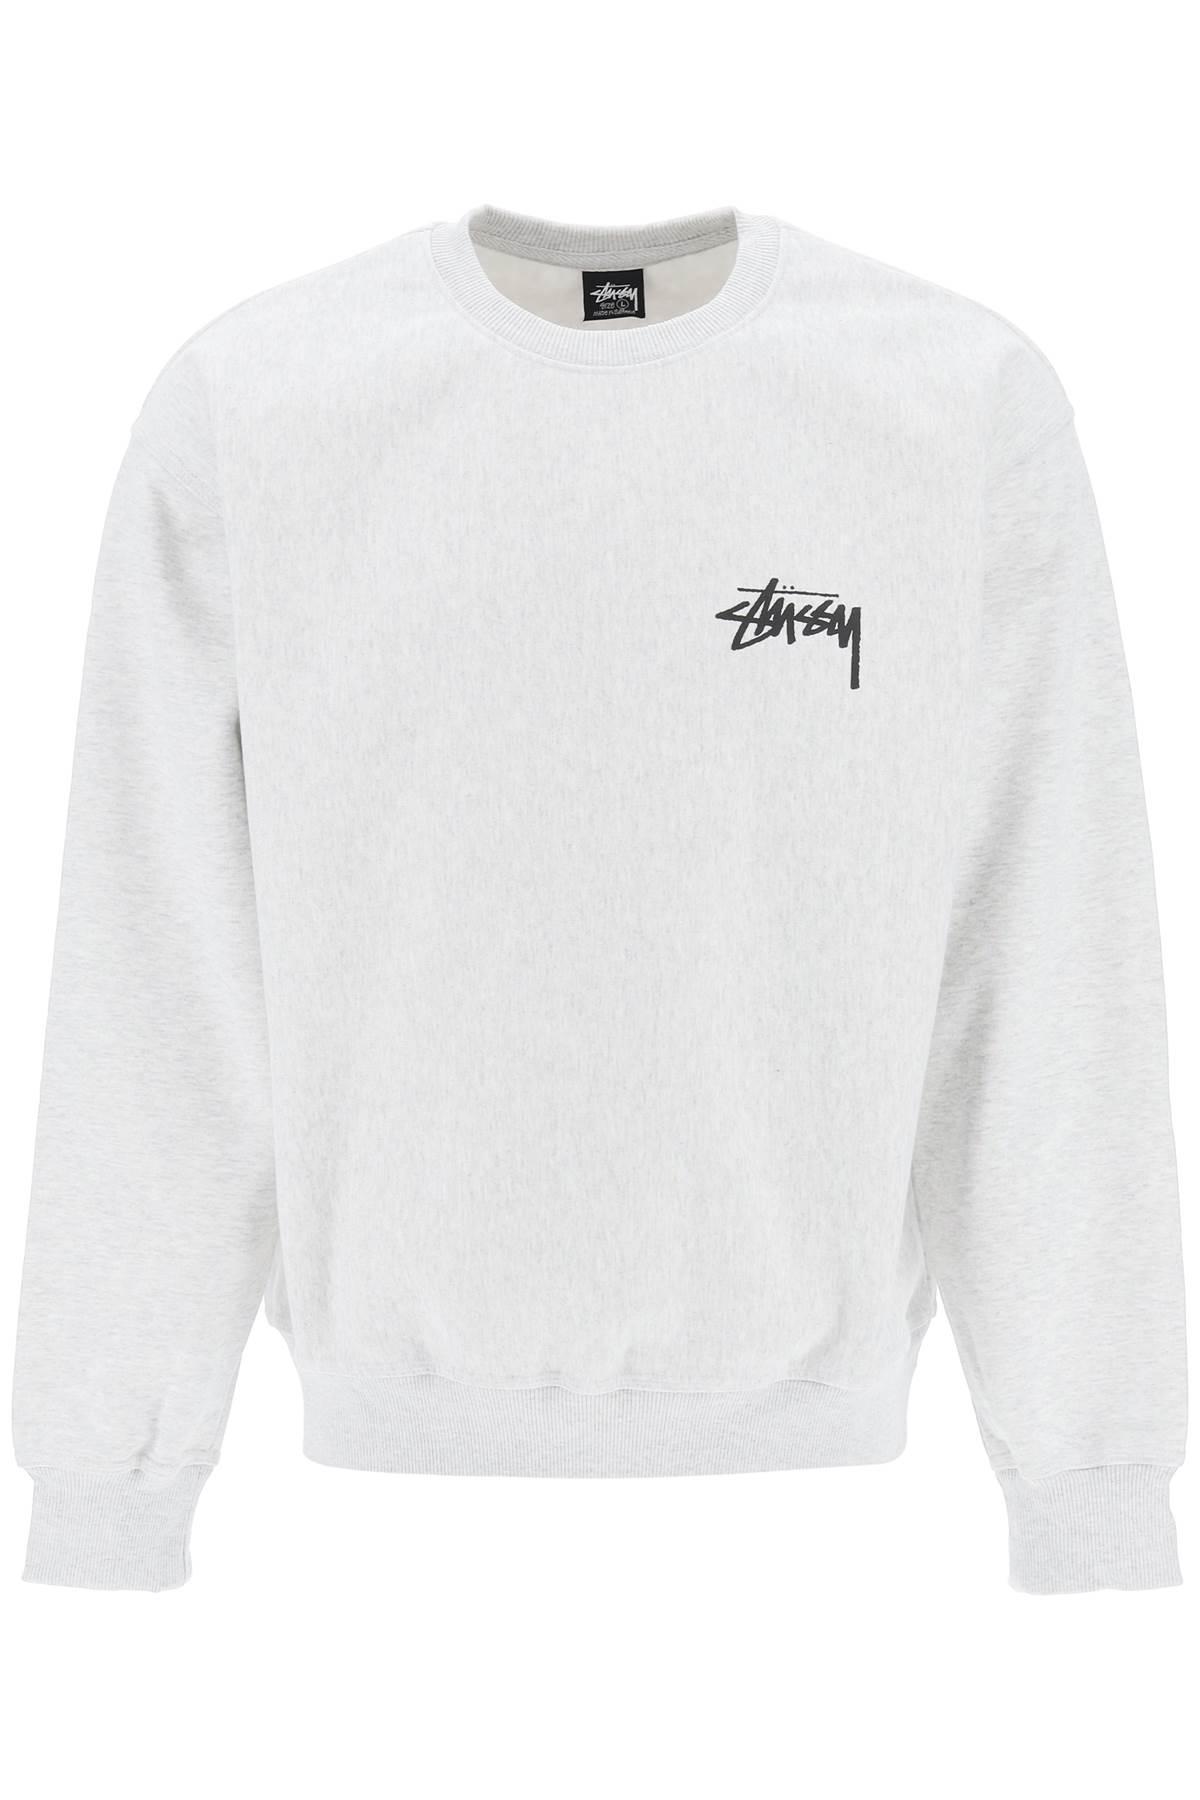 Stussy Sweatshirt With Back Logo Print in White for Men | Lyst UK